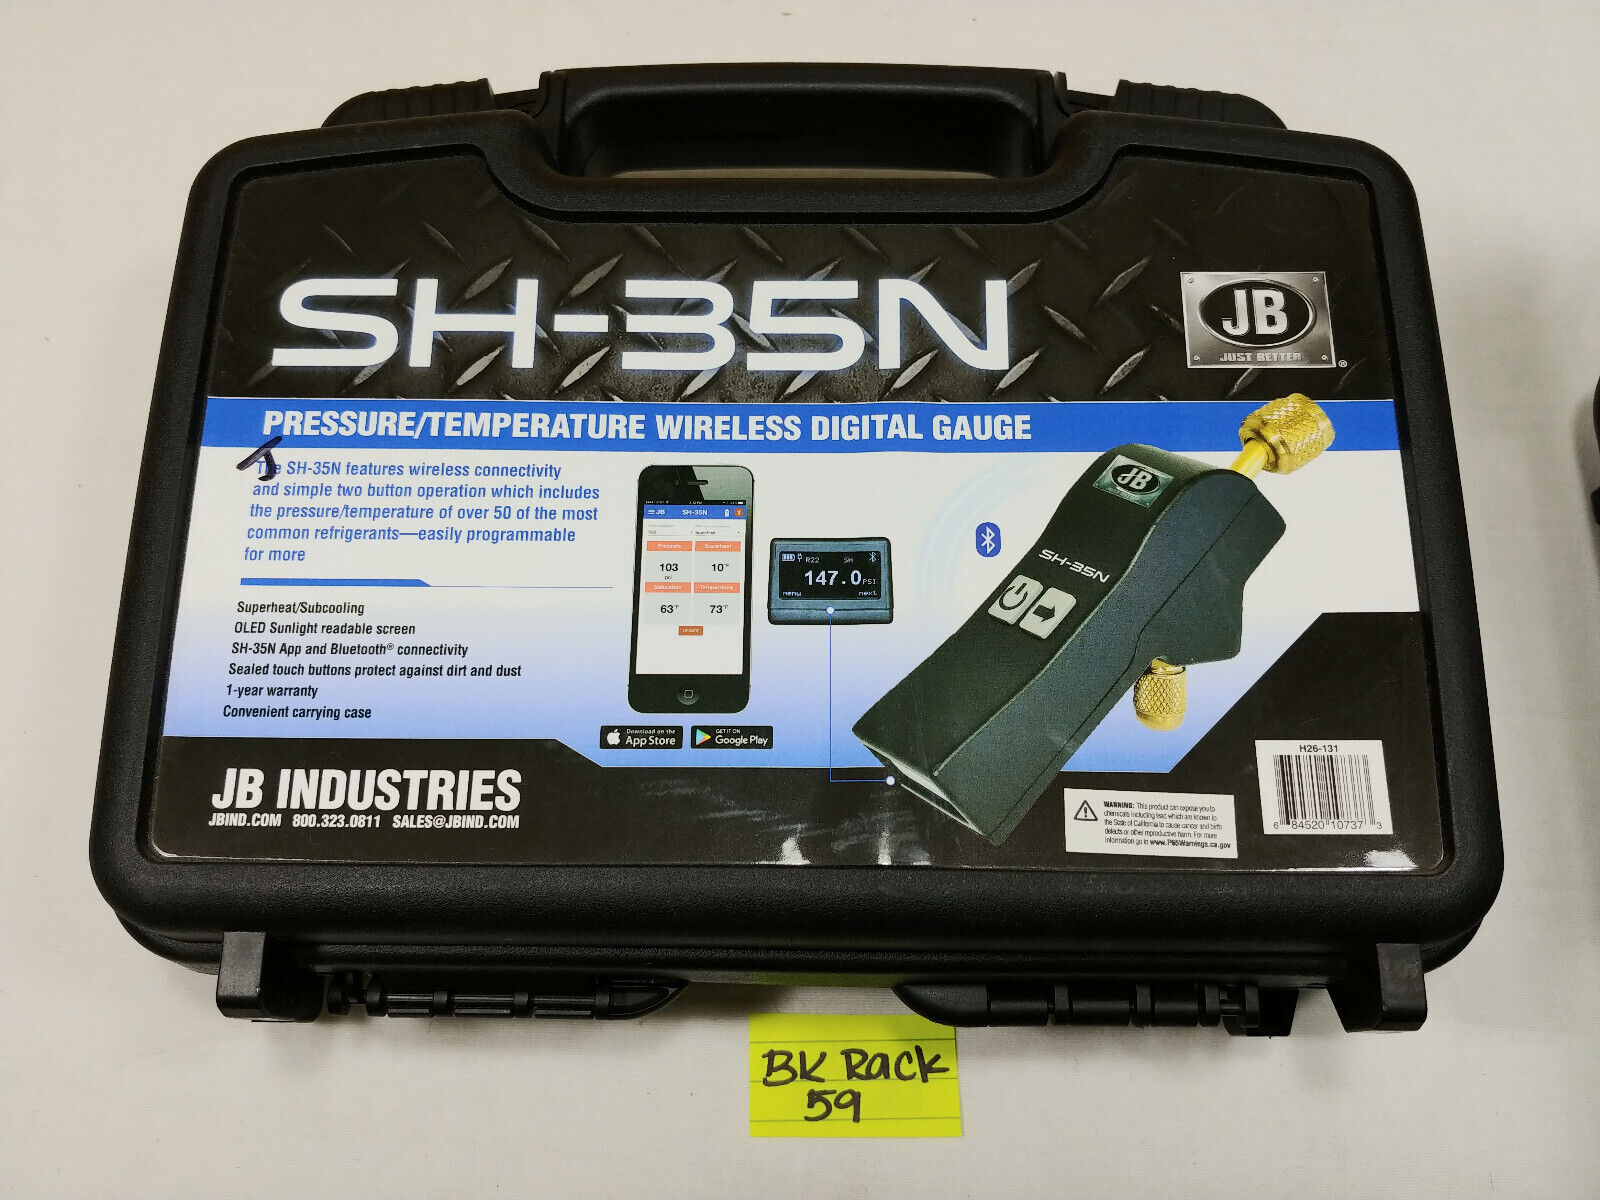 JB Industries SH-35N Wireless Digital Gauge for Superheat and Subcooling